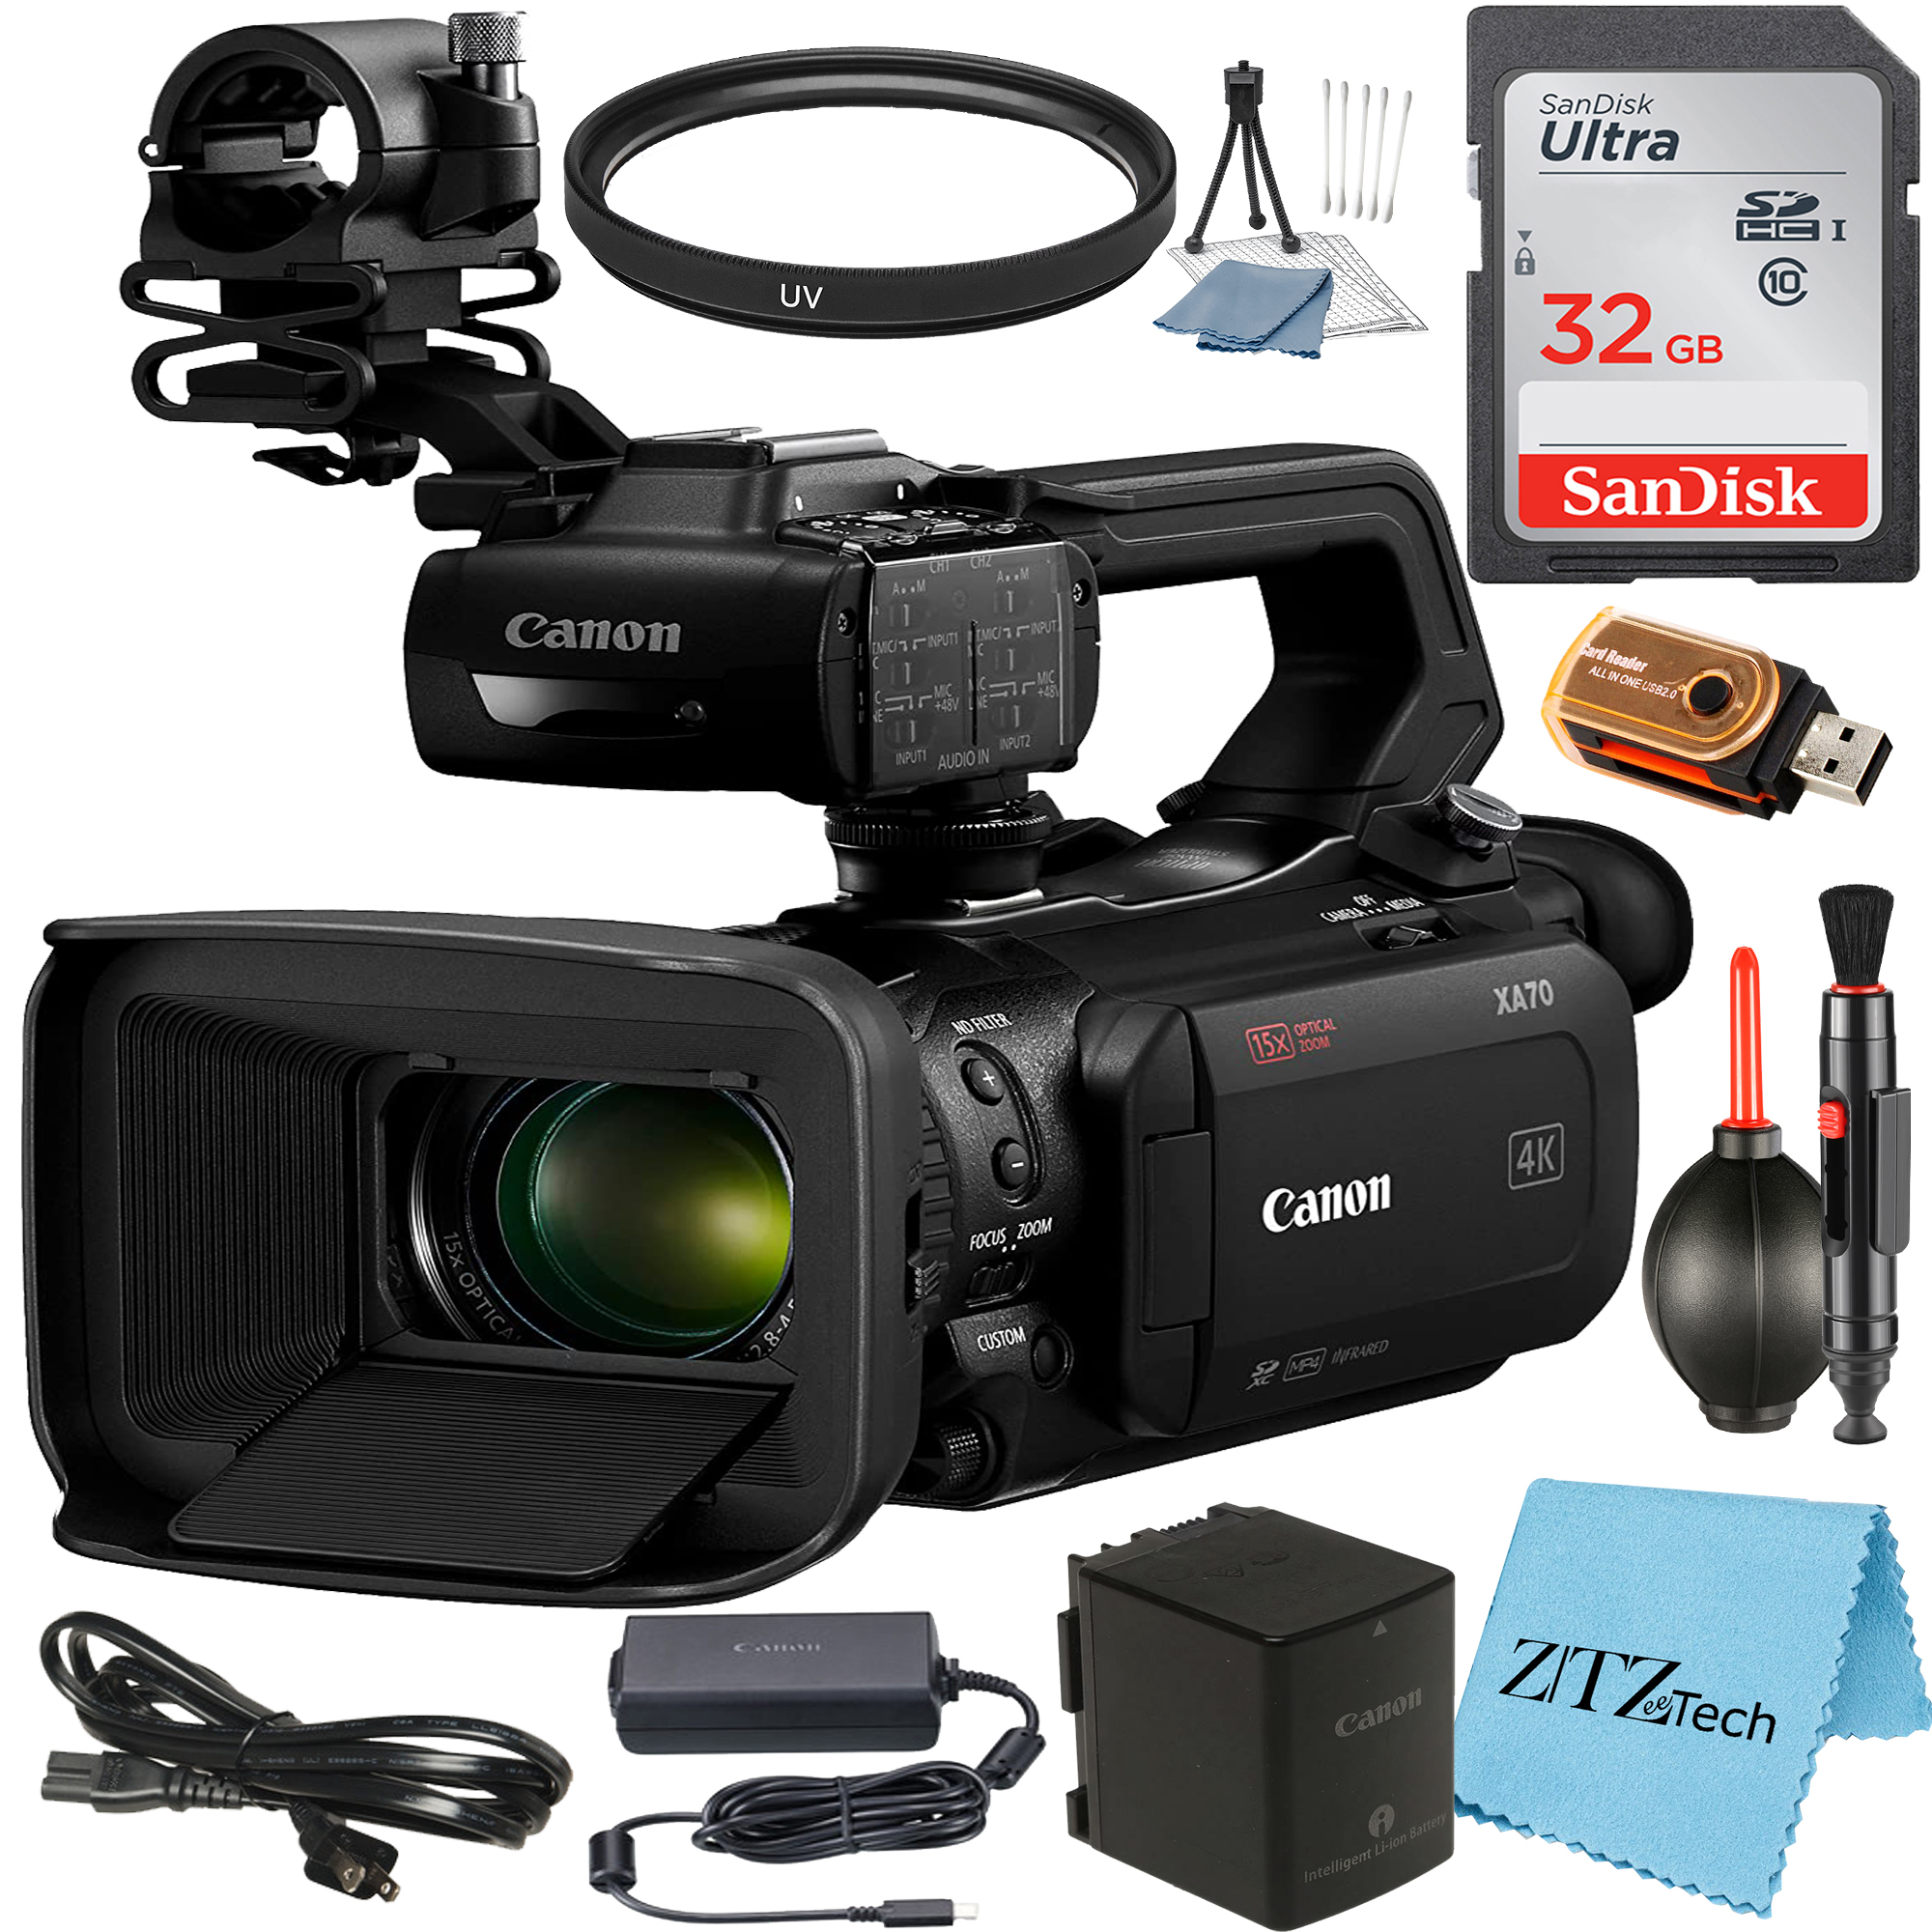 Canon XA70 UHD 4K30 Camcorder with Dual-Pixel Autofocus + SanDisk 32GB Memory Card + UV Fliter + ZeeTech Accessory Bundle